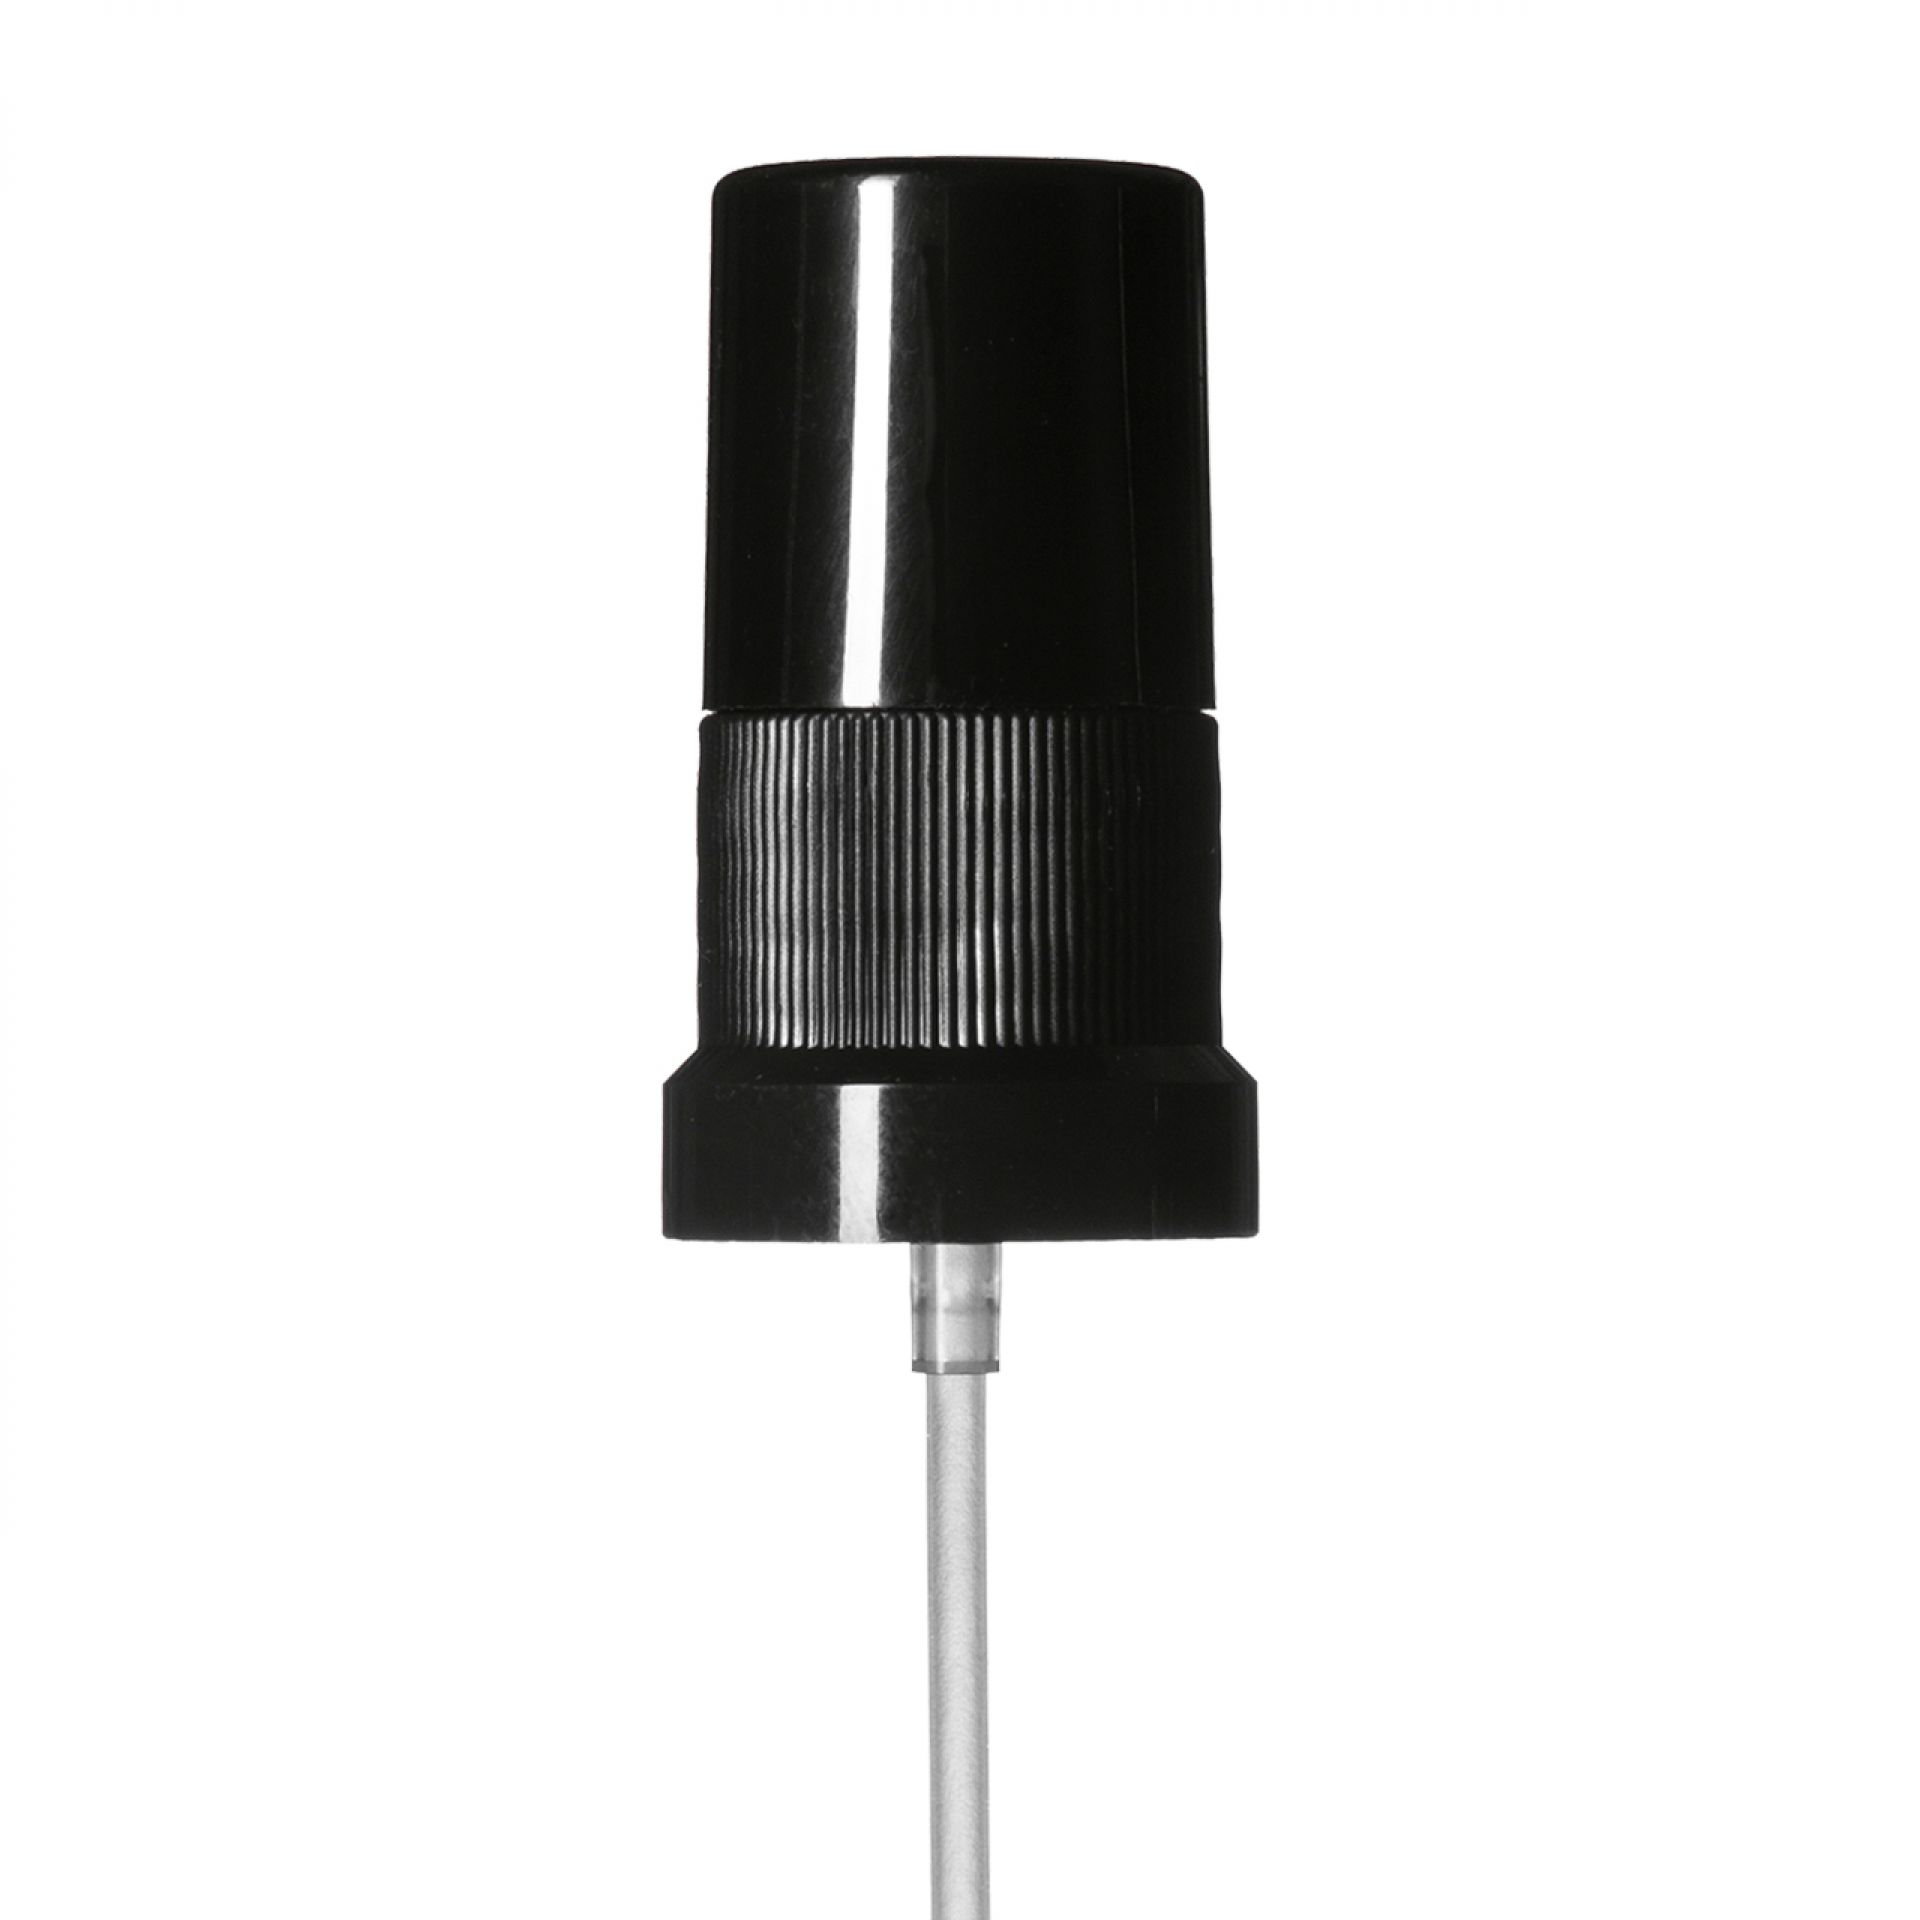 Mist sprayer Classic, DIN18, PP, black, ribbed, dose 0.10 ml, black overcap (Orion 10-63)